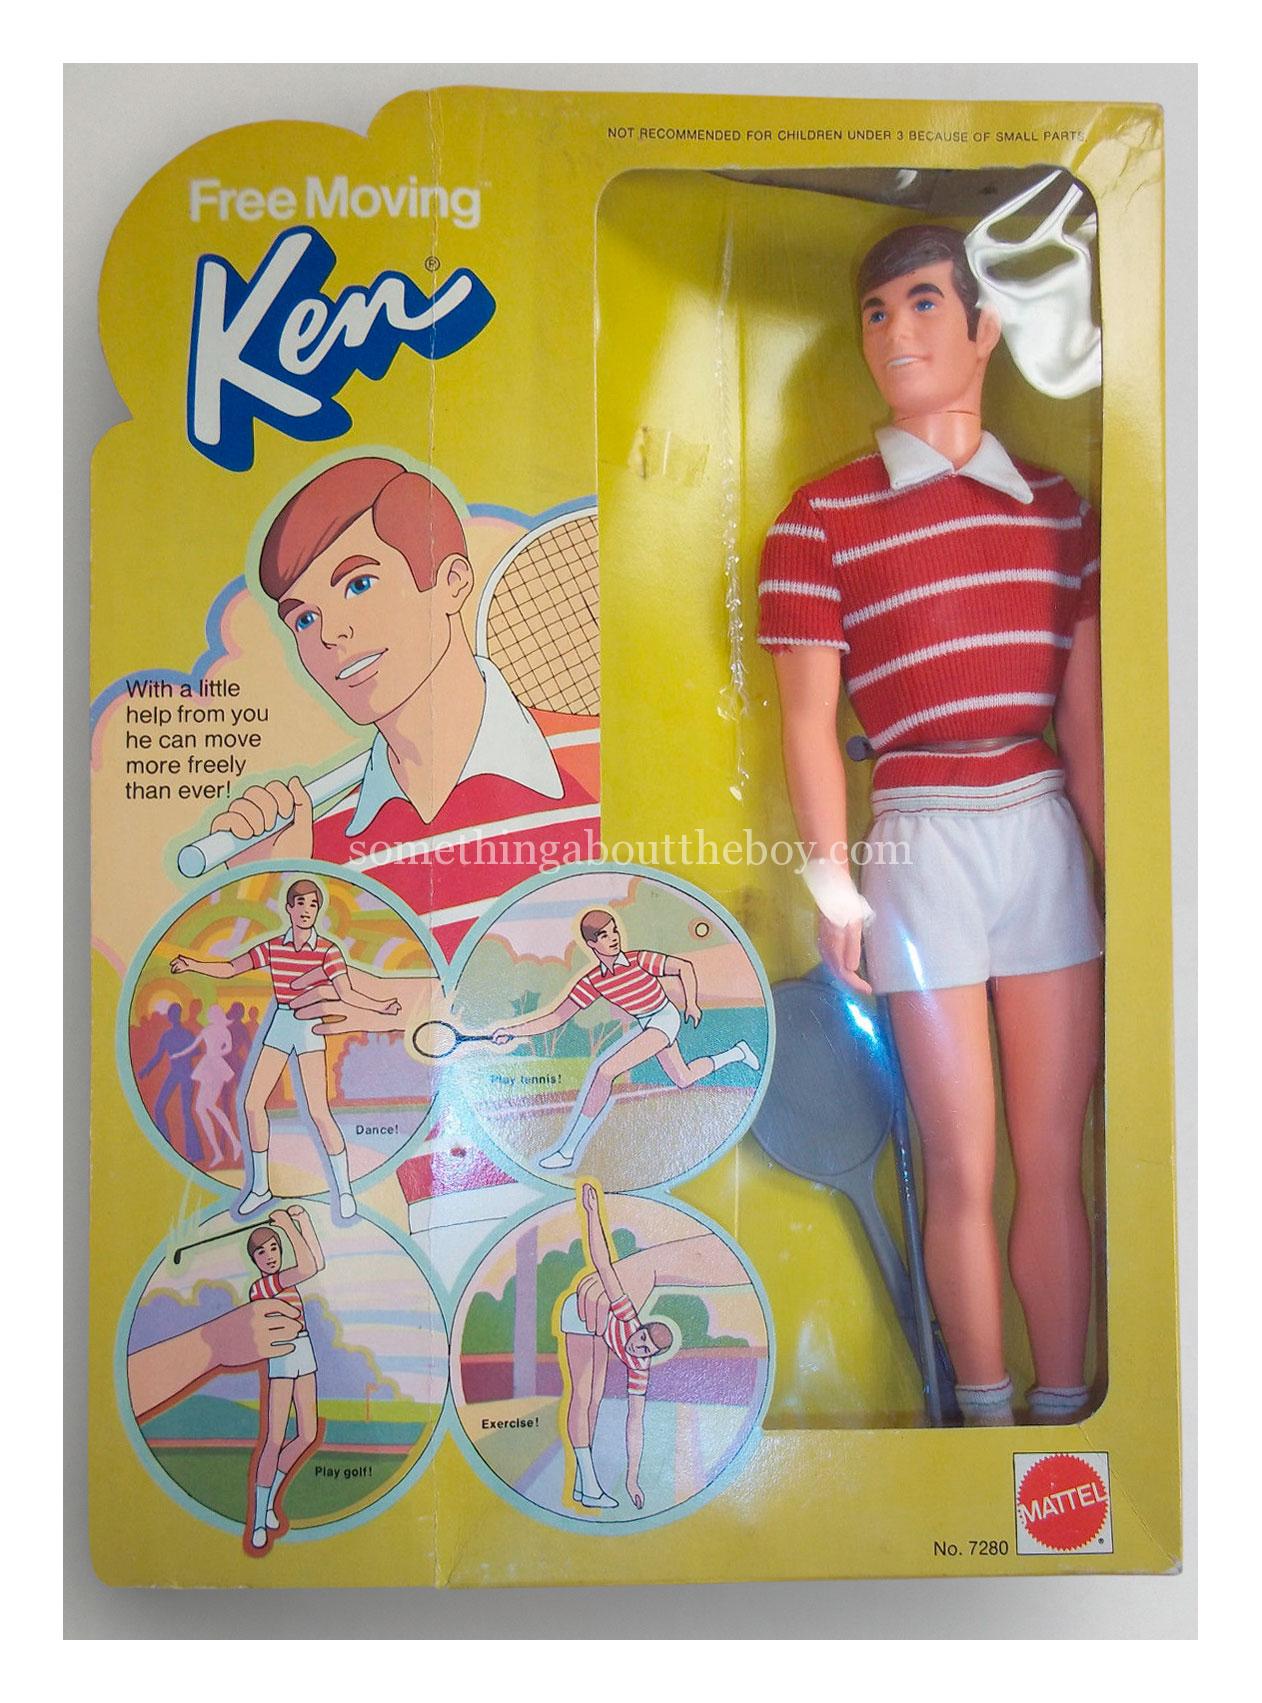 1975 #7280 Free Moving Ken in original packaging